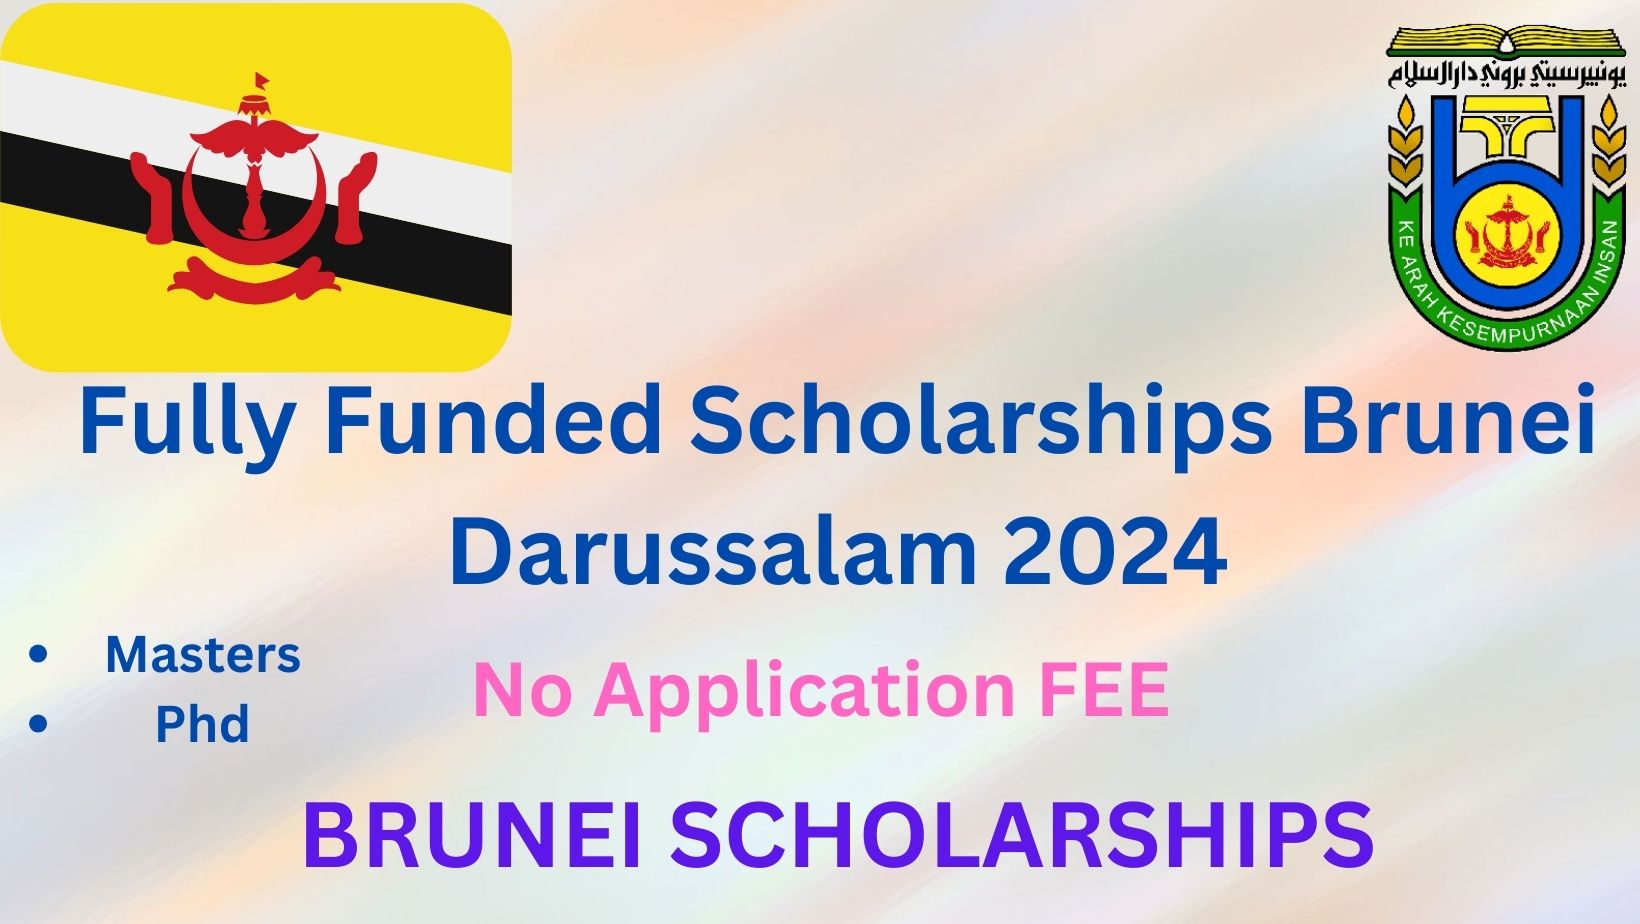 Brunei Darussalam 2024